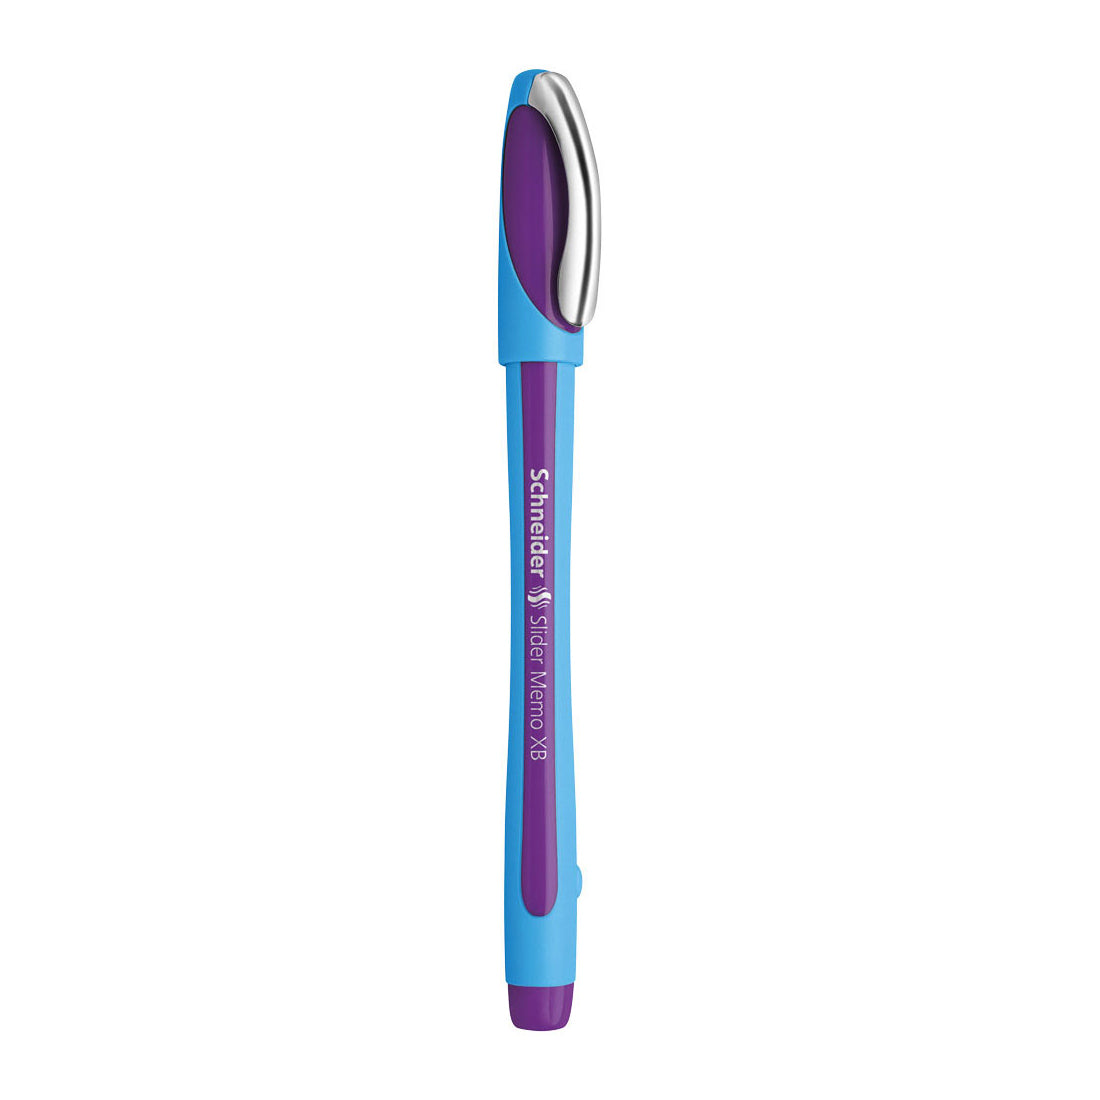 Memo Ballpoint Pens XB, Box of 10#colour_violet